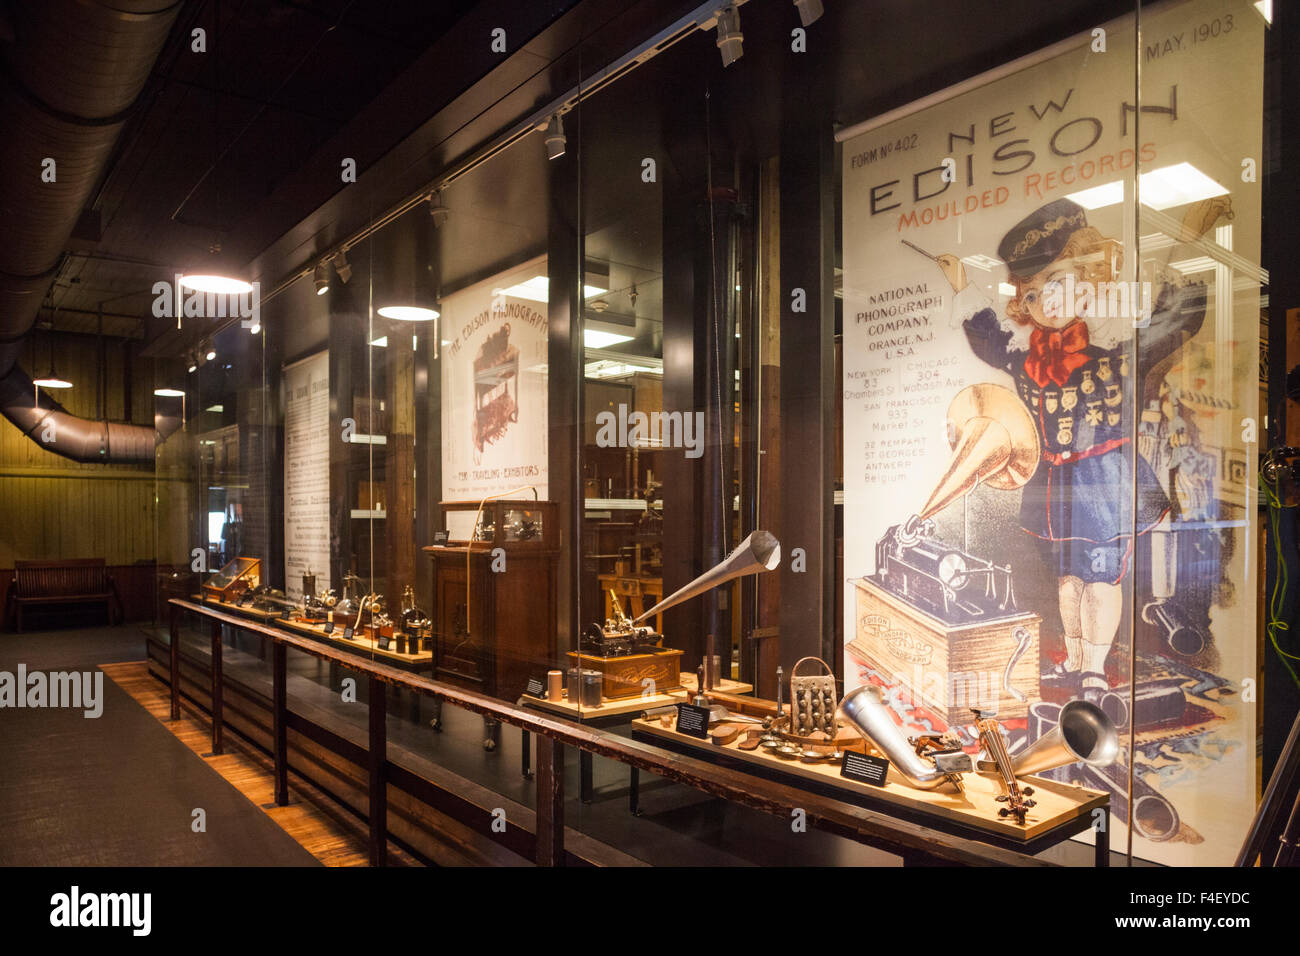 USA, New Jersey, West Orange, Thomas Edison National Historical Park, interior, display of Edison inventions Stock Photo